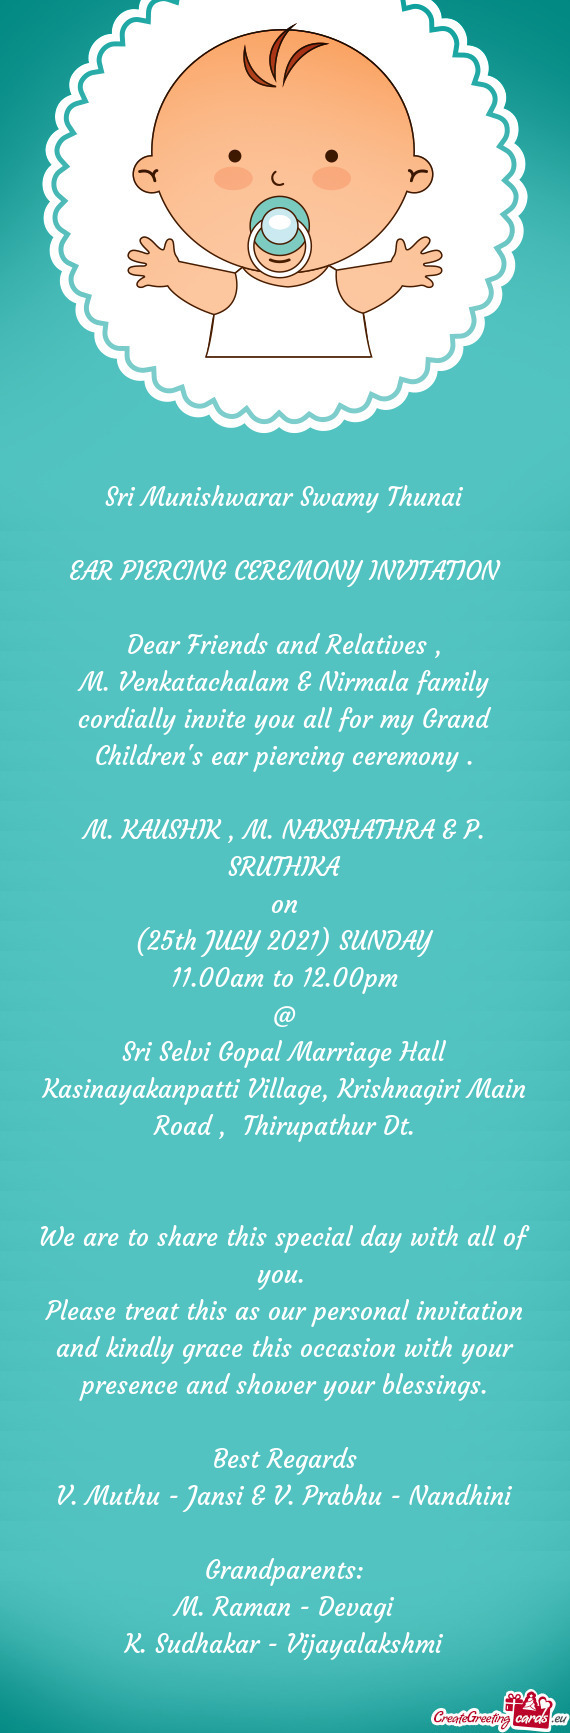 M. Venkatachalam & Nirmala family cordially invite you all for my Grand Children